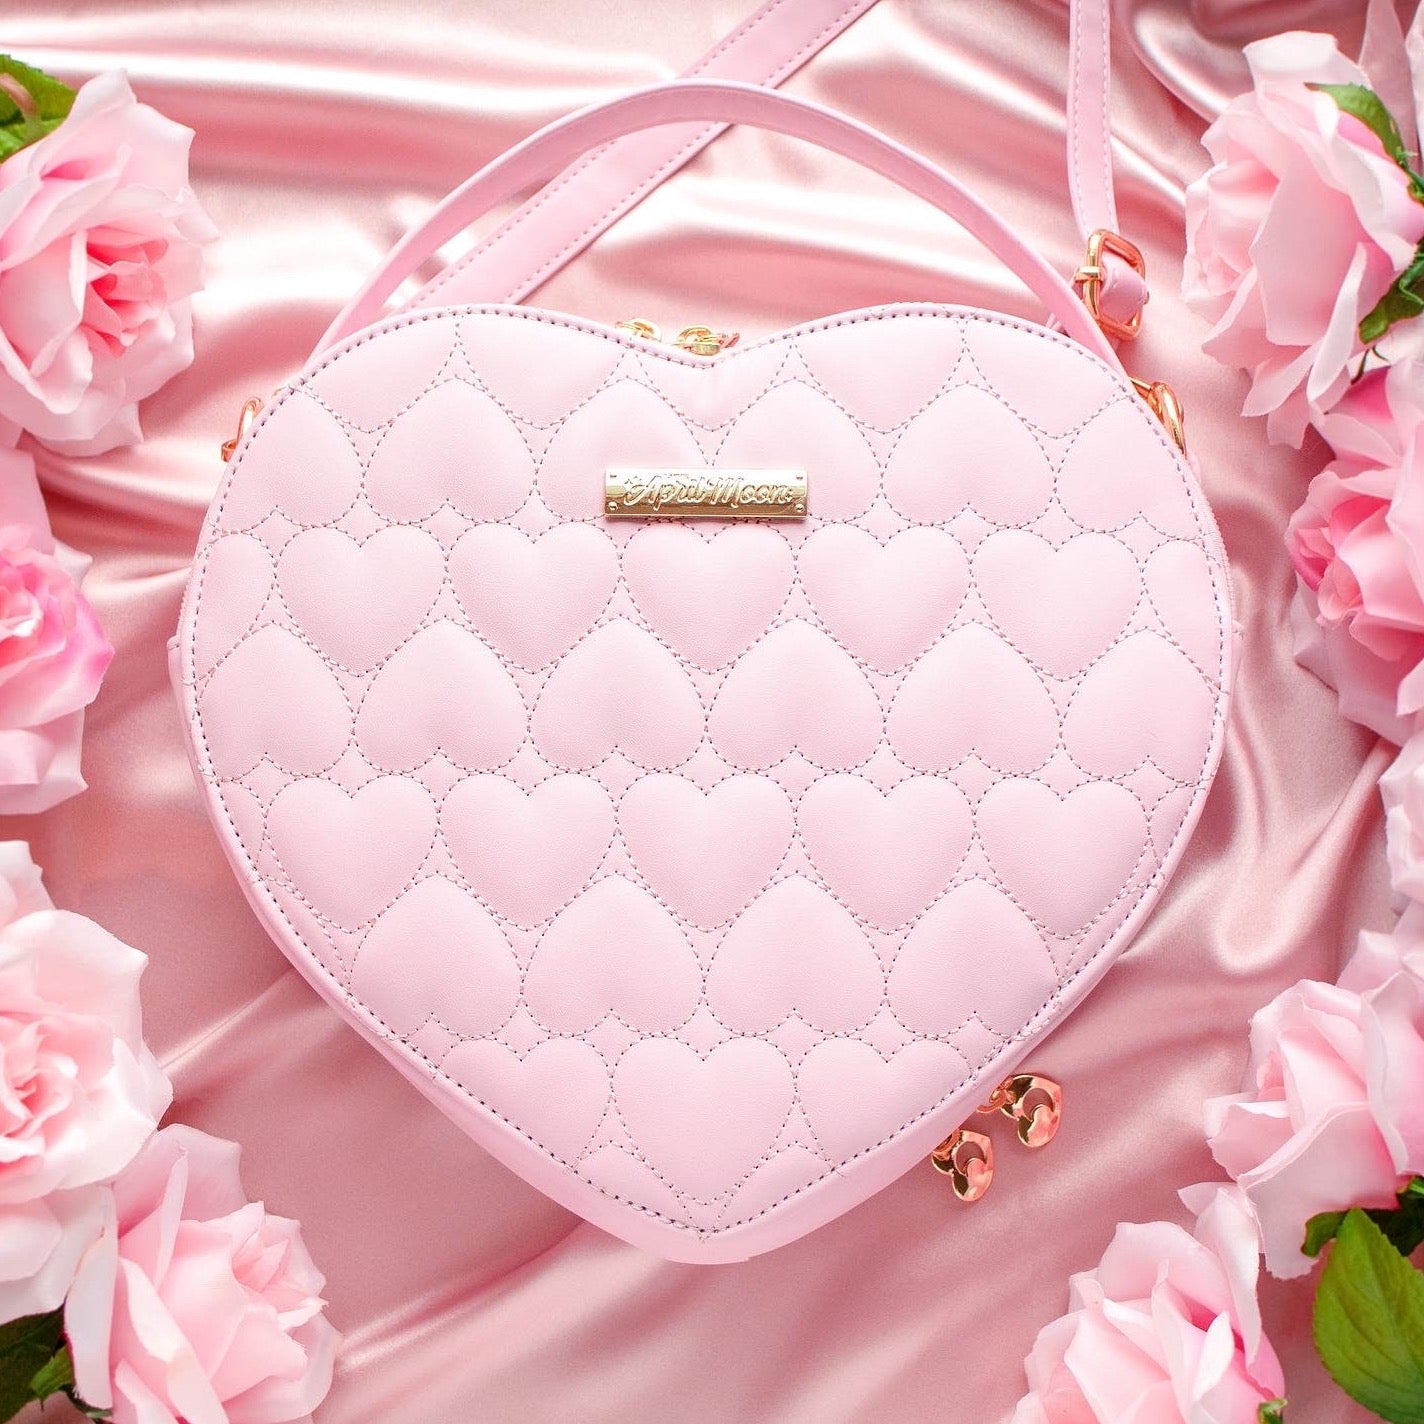 pink heart shaped bag